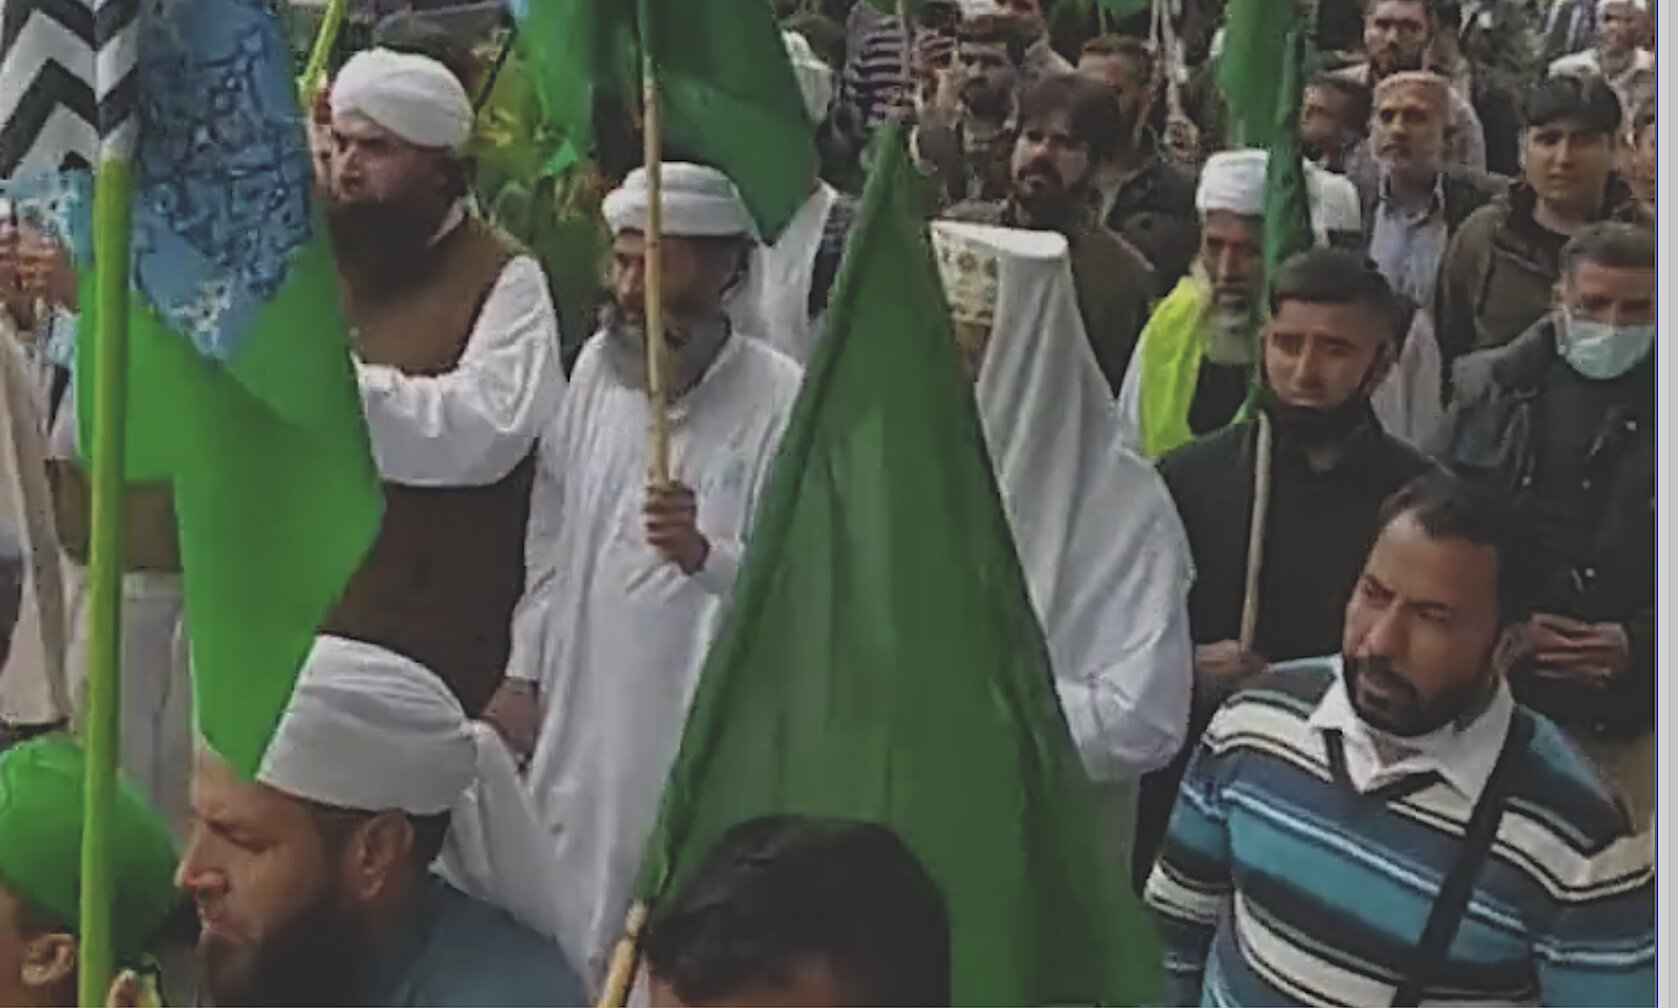 Oι πακιστανοί ύψωσαν σημαίες-σύμβολο των τζιχαντιστών!!! Οι σημαίες με τις ασπρόμαυρες ρίγες, το γαλάζιο και το πράσινο που κρατάνε δεν είναι του Πακιστάν. 